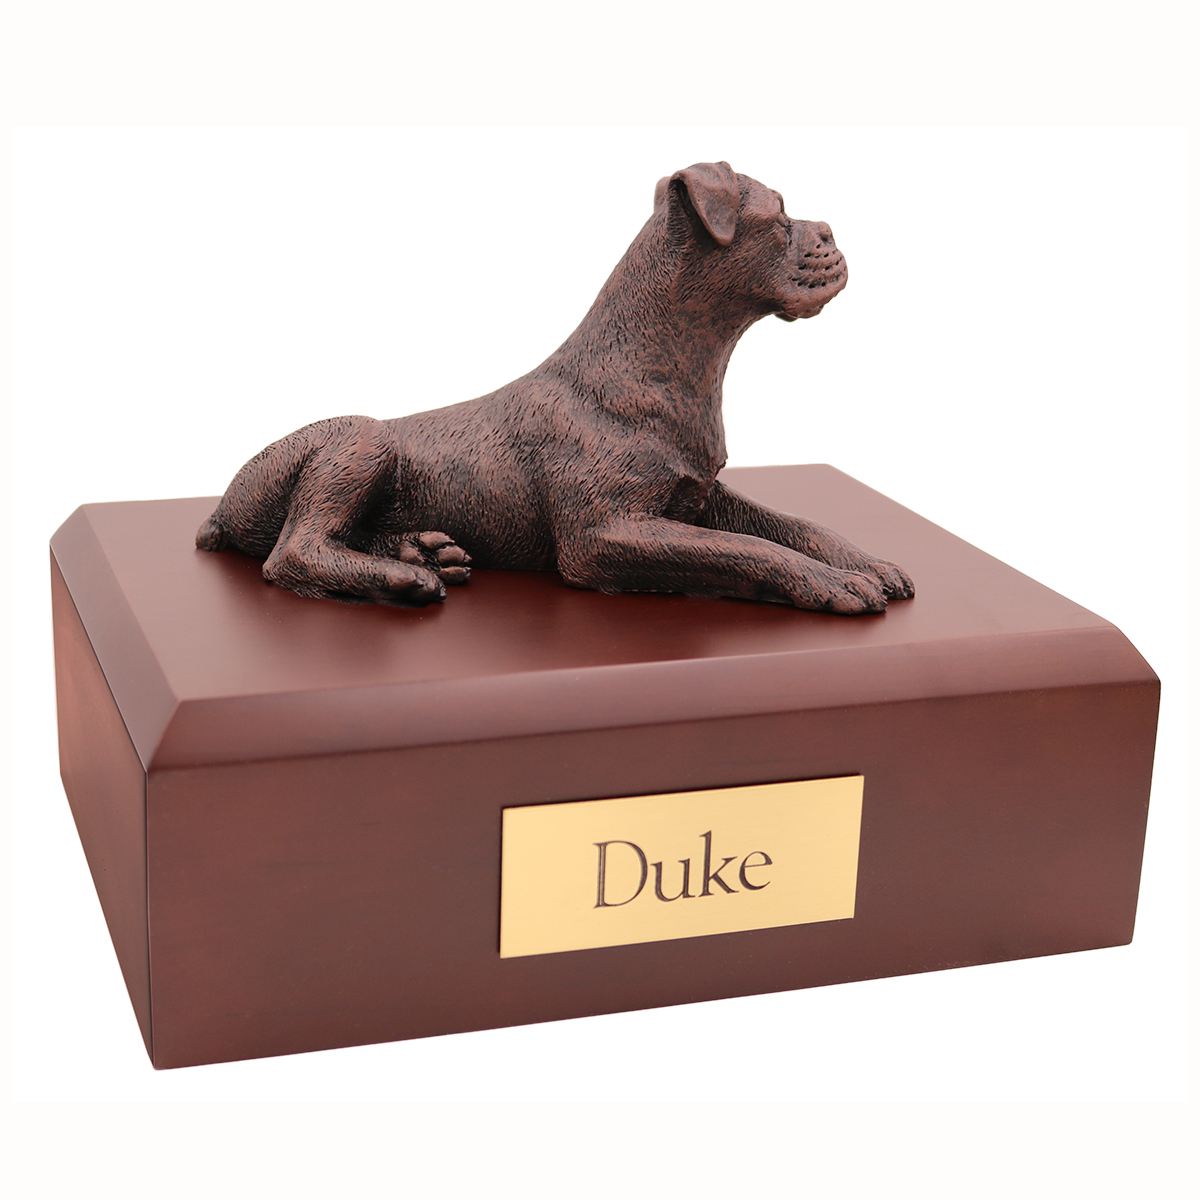 Dog, Boxer, Bronze - ears down - Figurine Urn